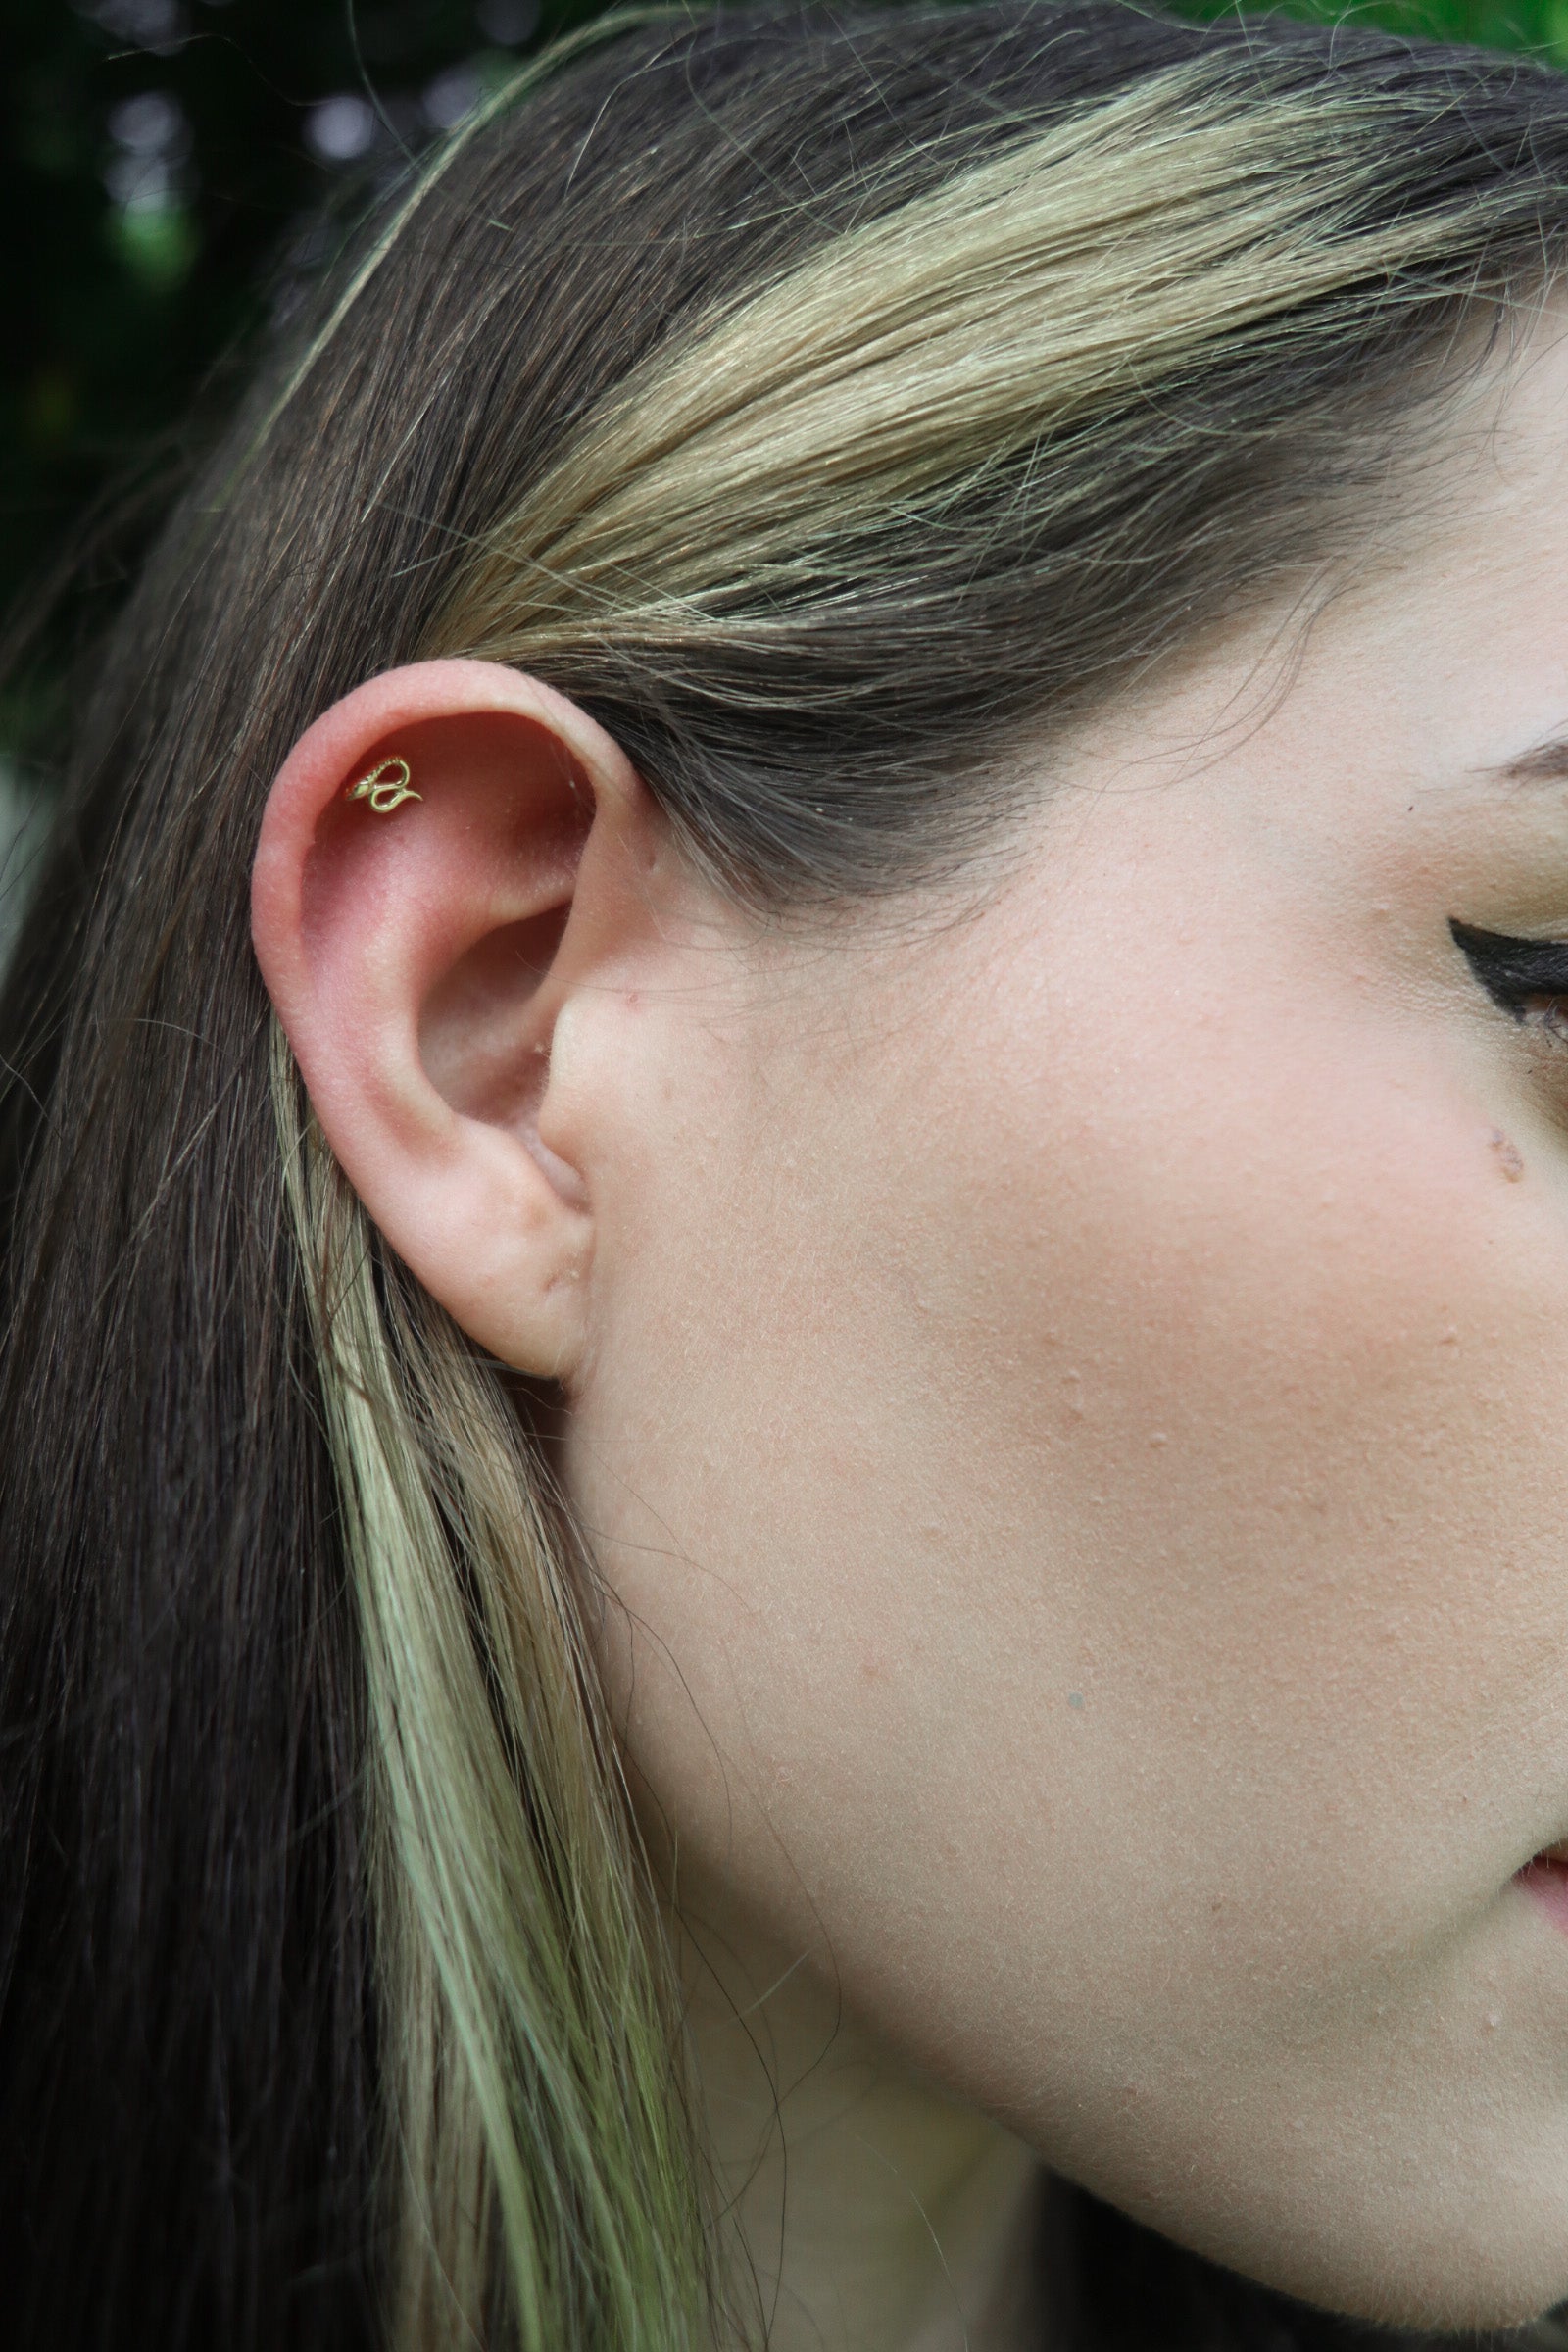 10K Solid Gold Cartilage Earring In a Snake Design